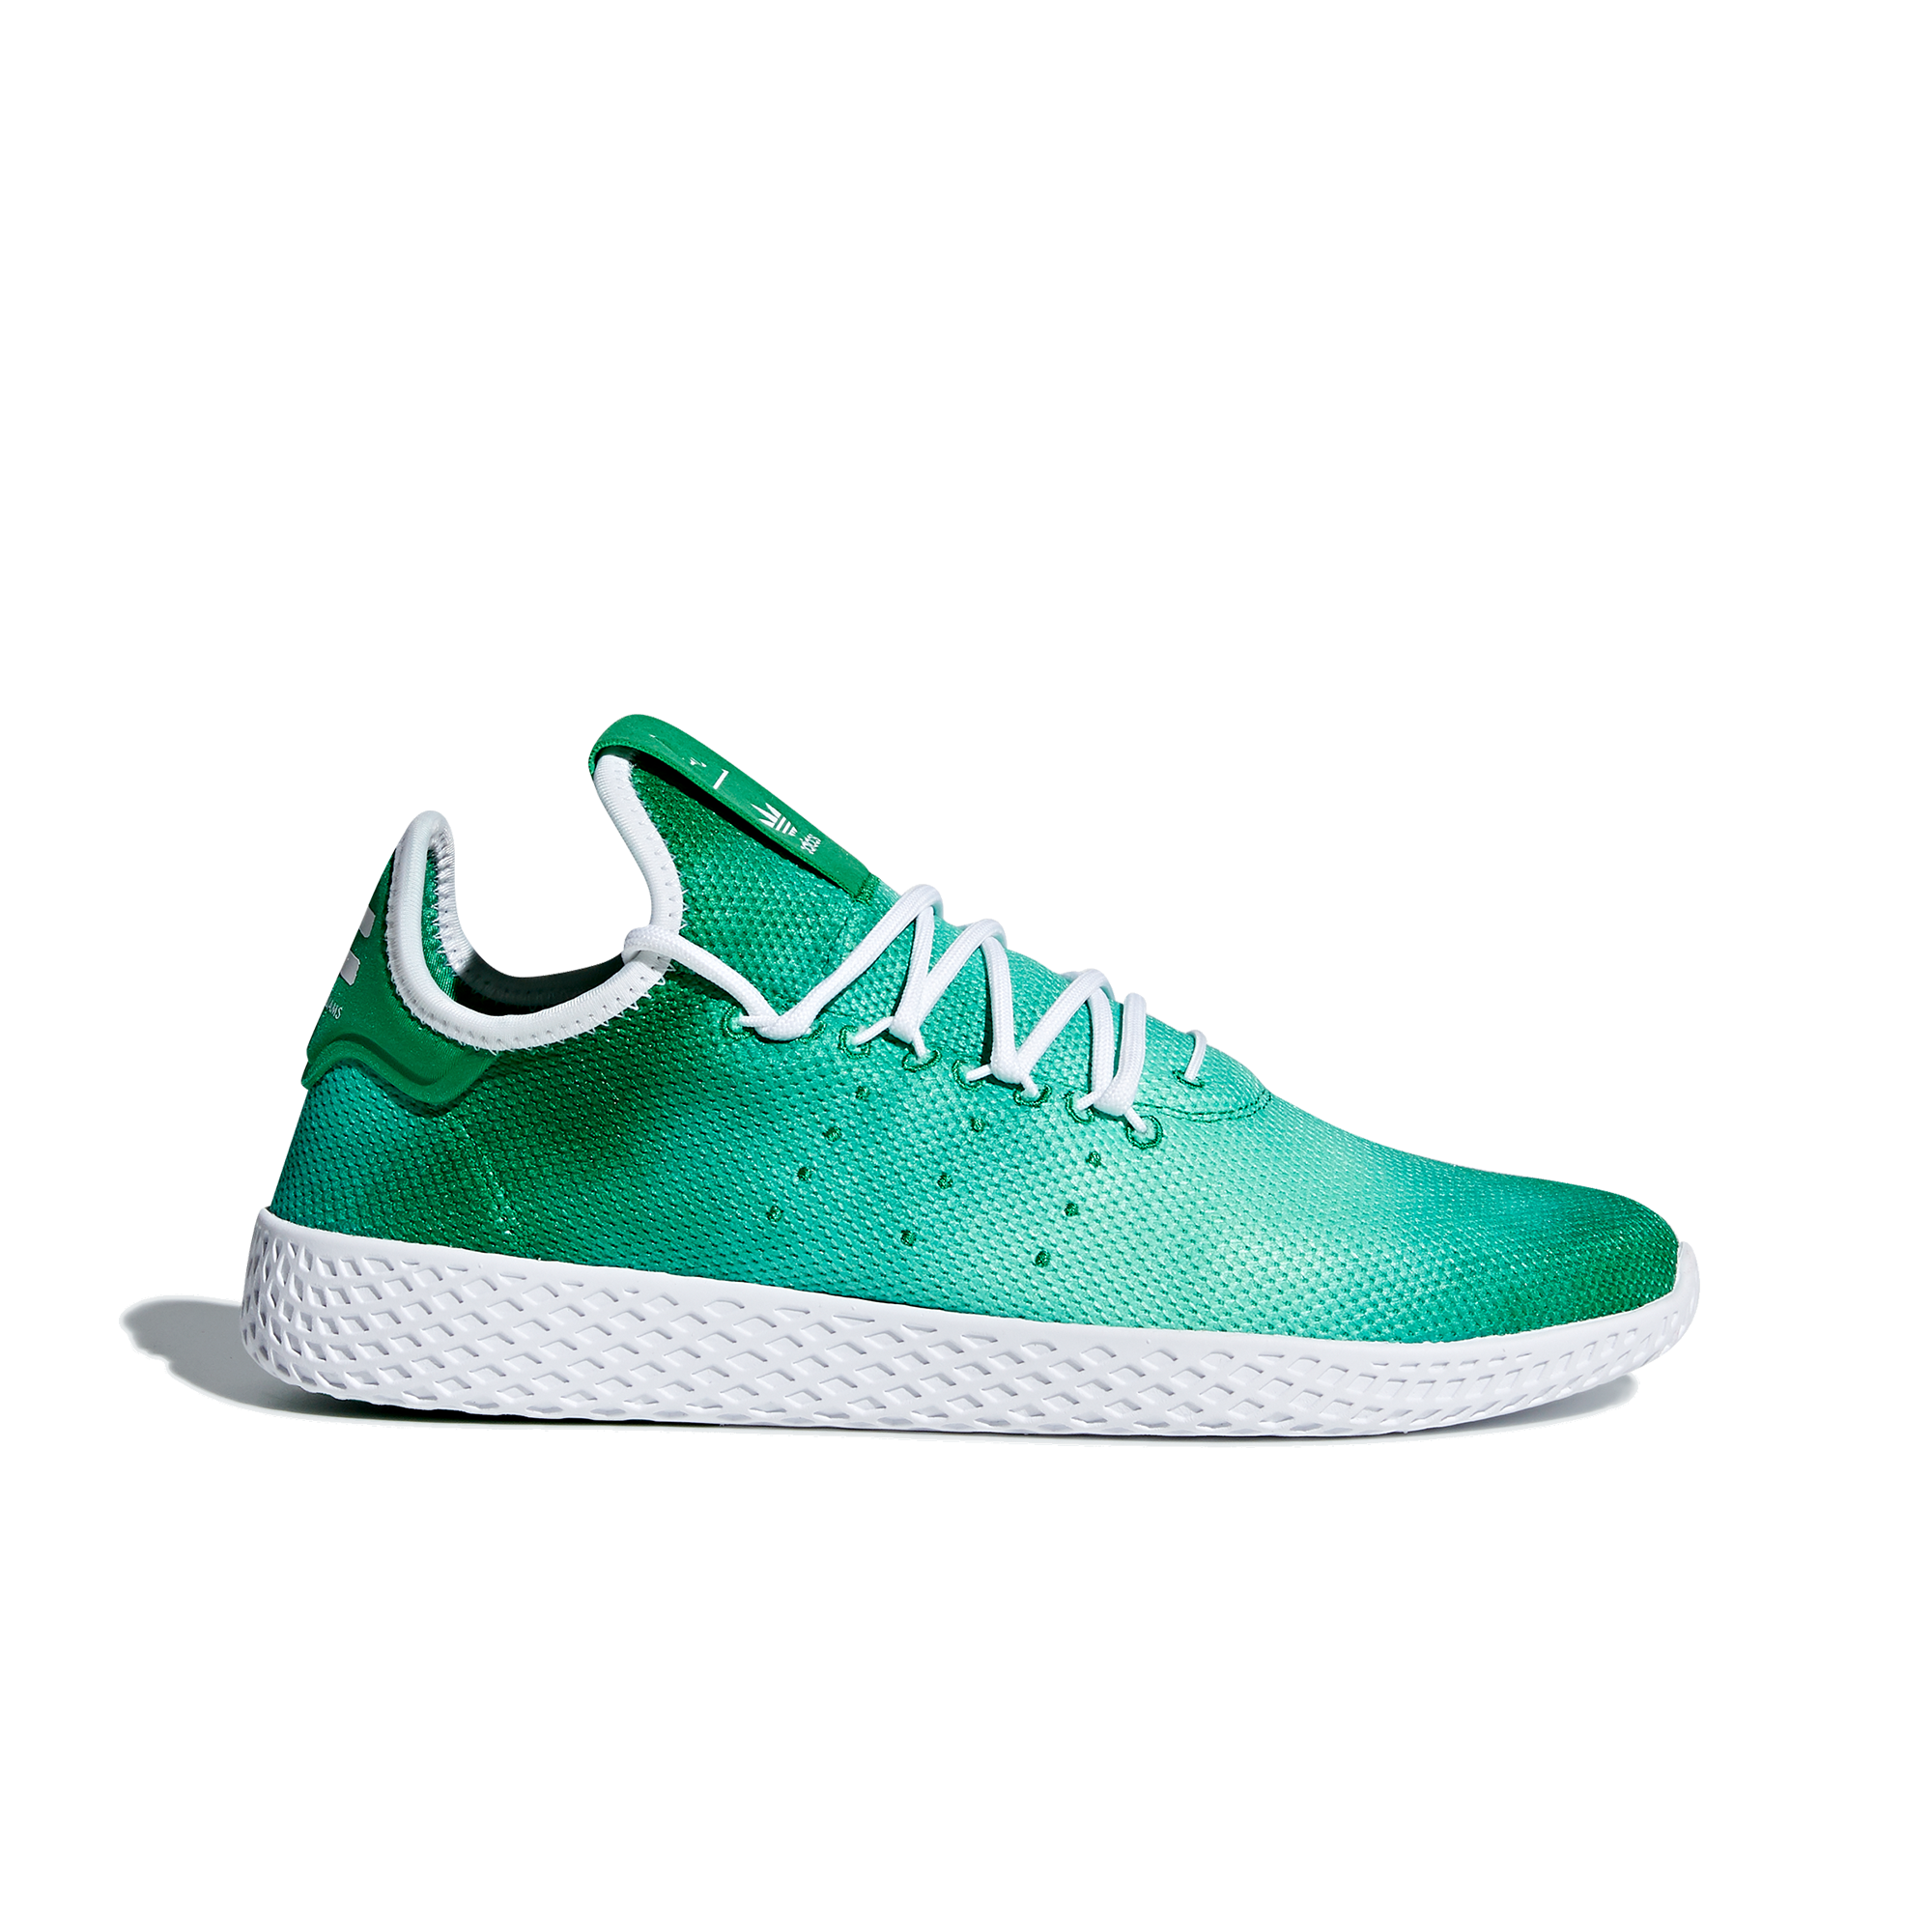 adidas pw tennis hu white green